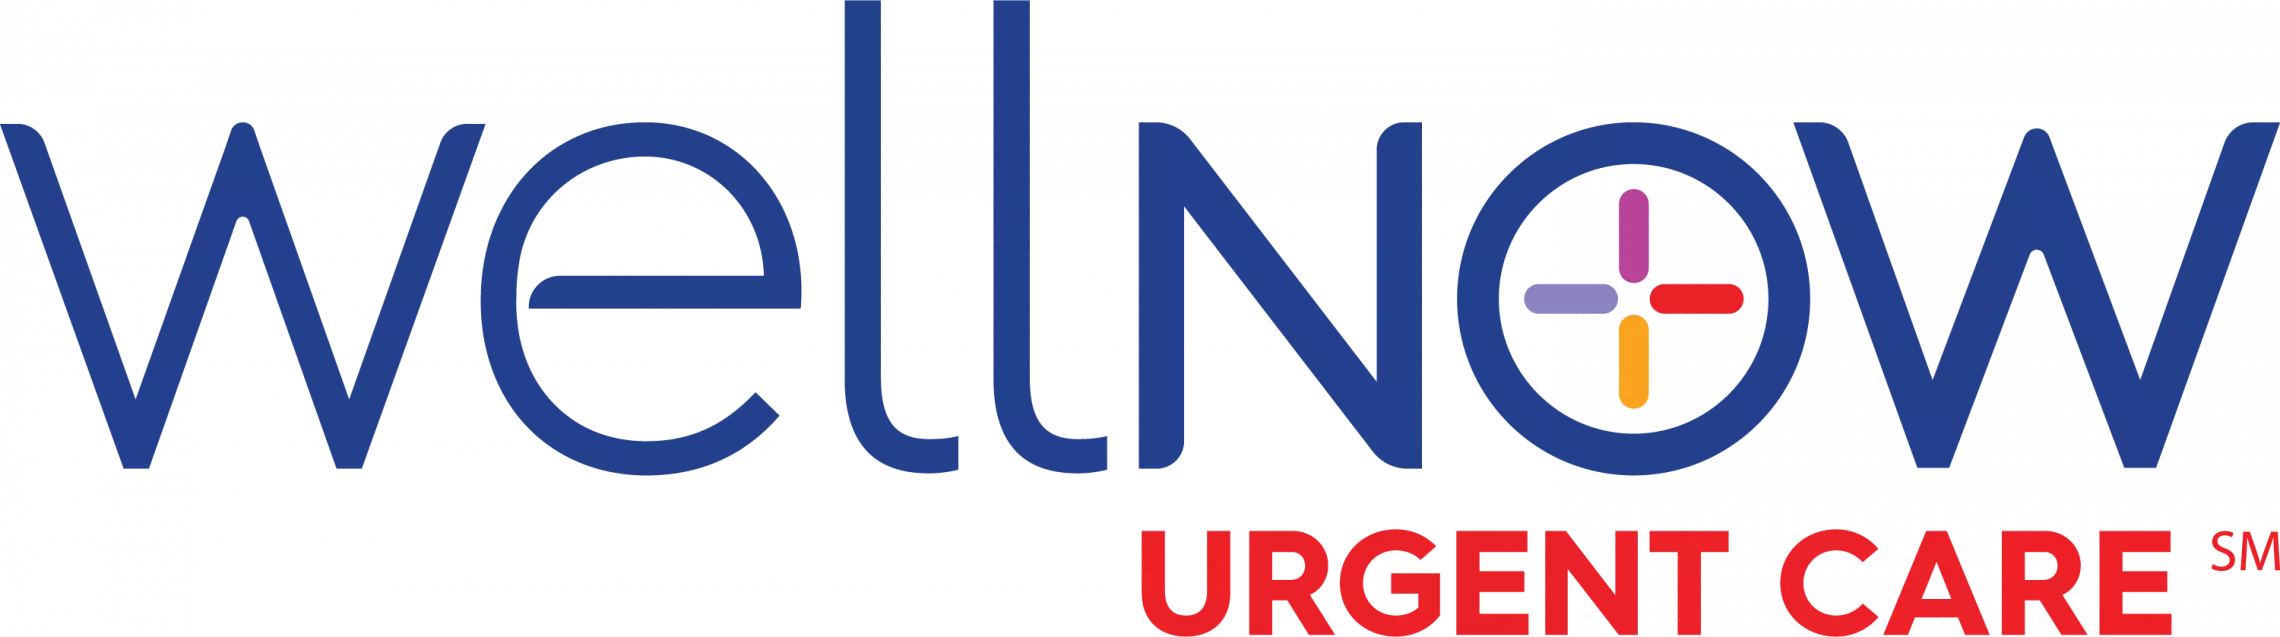 WellNow Urgent Care logo